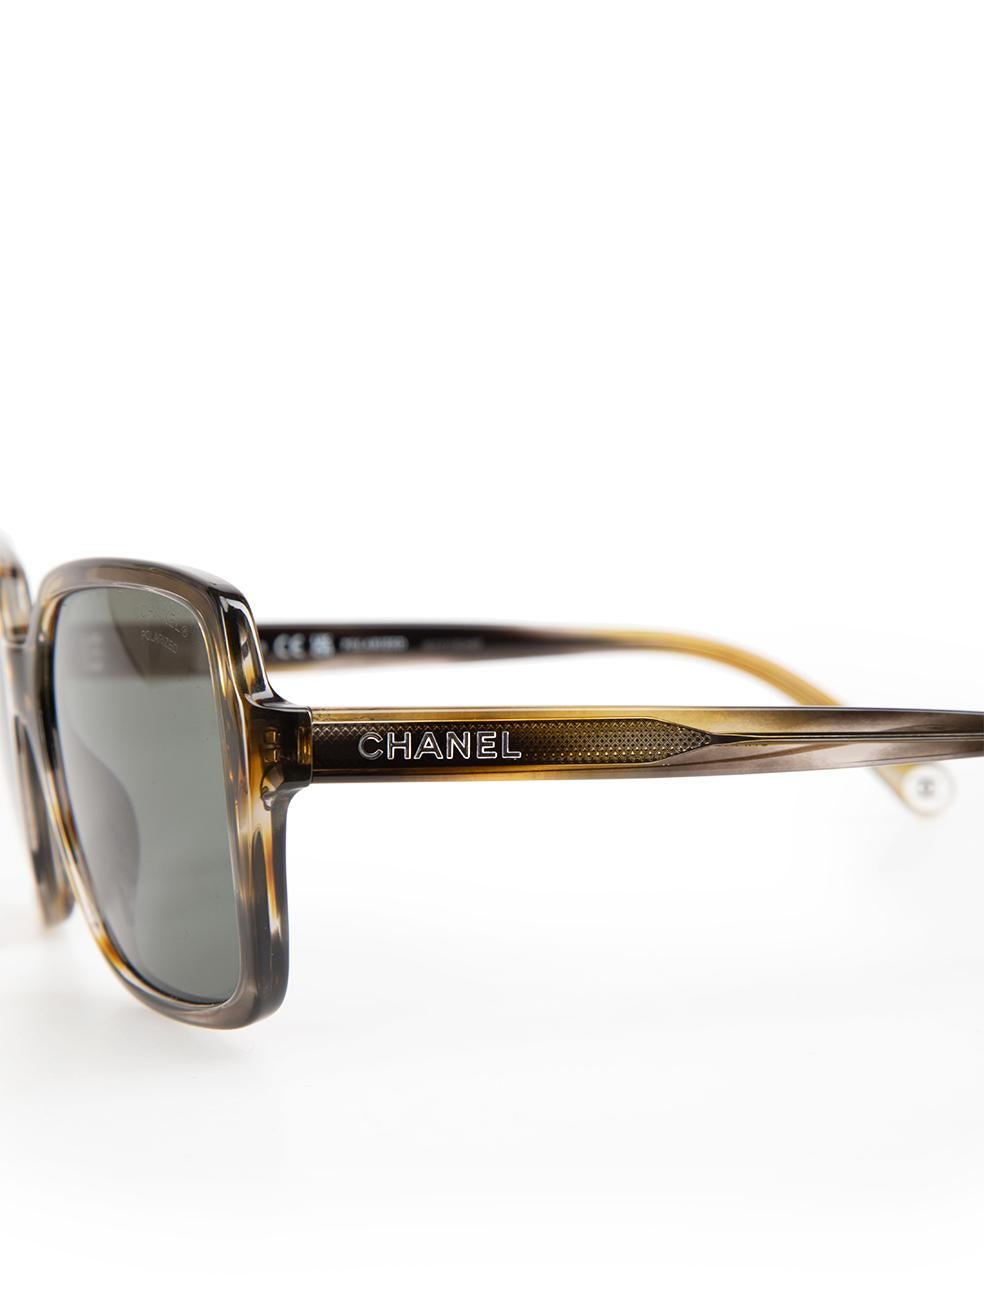 Chanel Green Tortoise Square Sunglasses For Sale 2